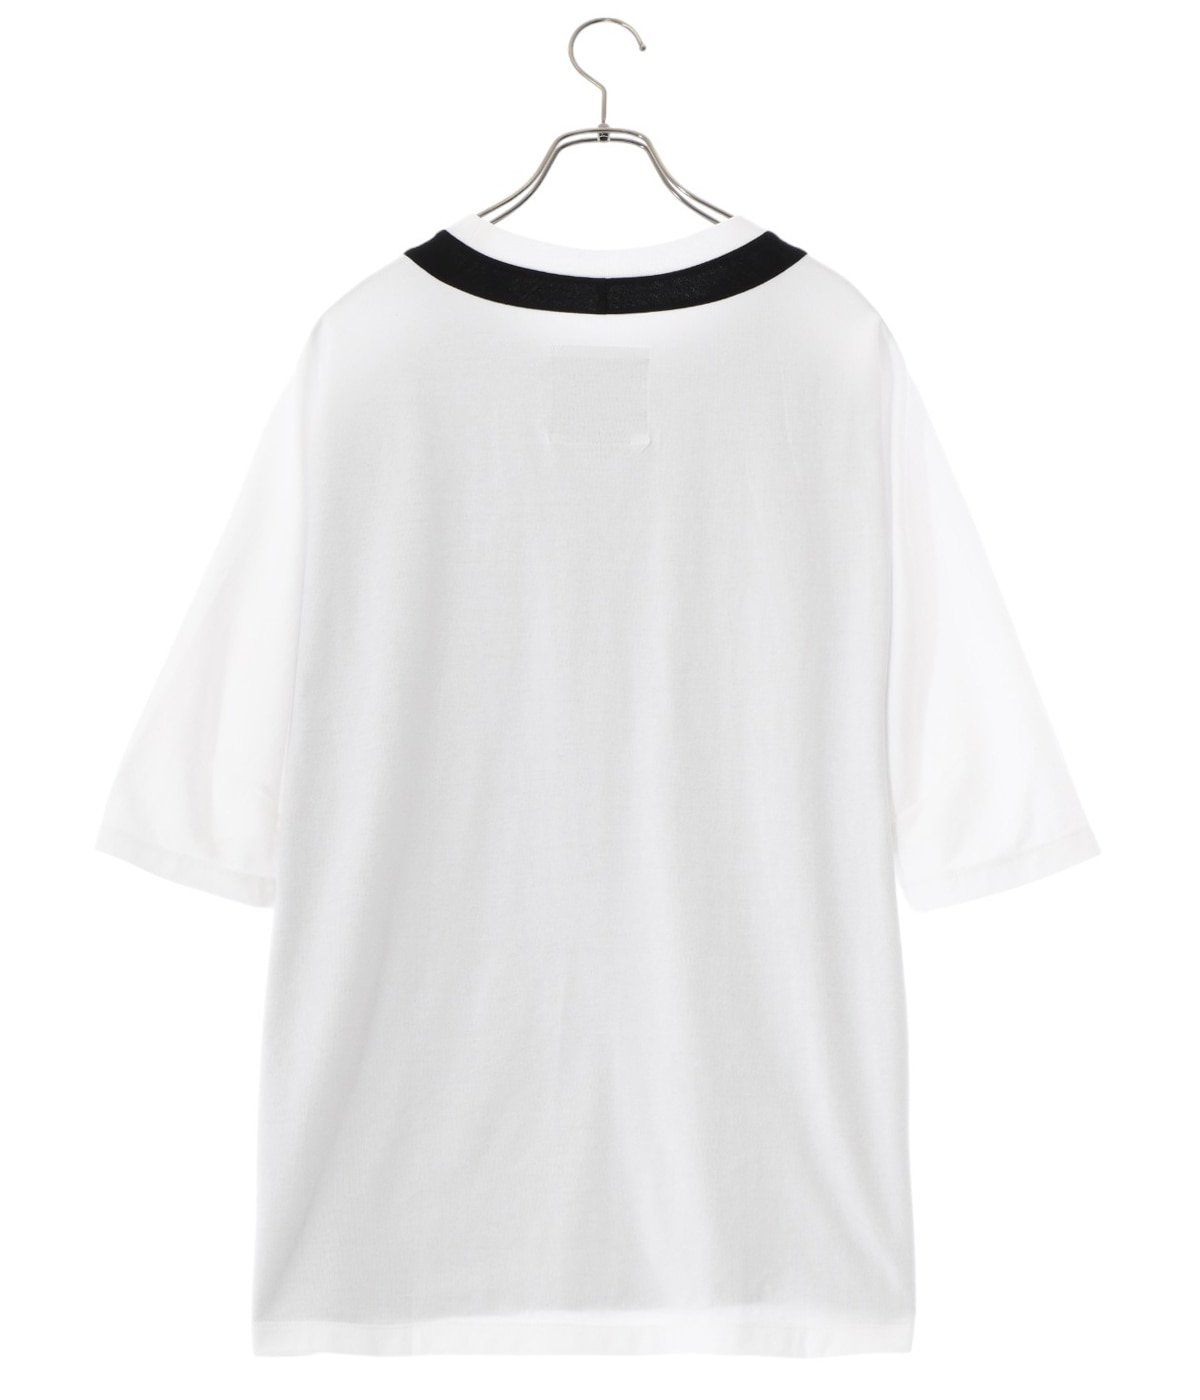 Kinetic T-shirt | FUMITO GANRYU(フミト ガンリュウ) / トップス ...